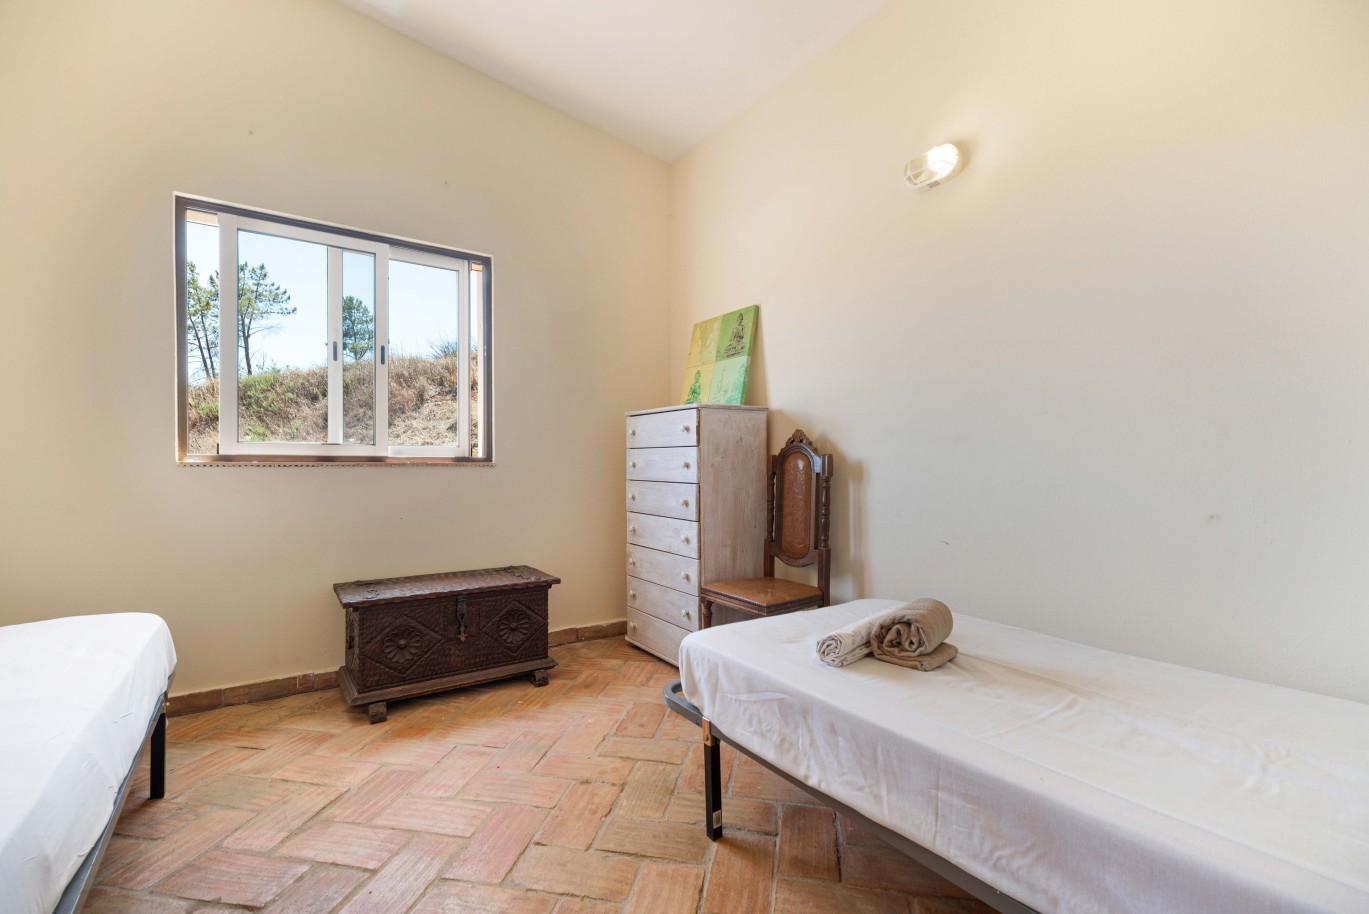 9 Bedroom Country Villa à vendre à Pereira, Algarve_231607